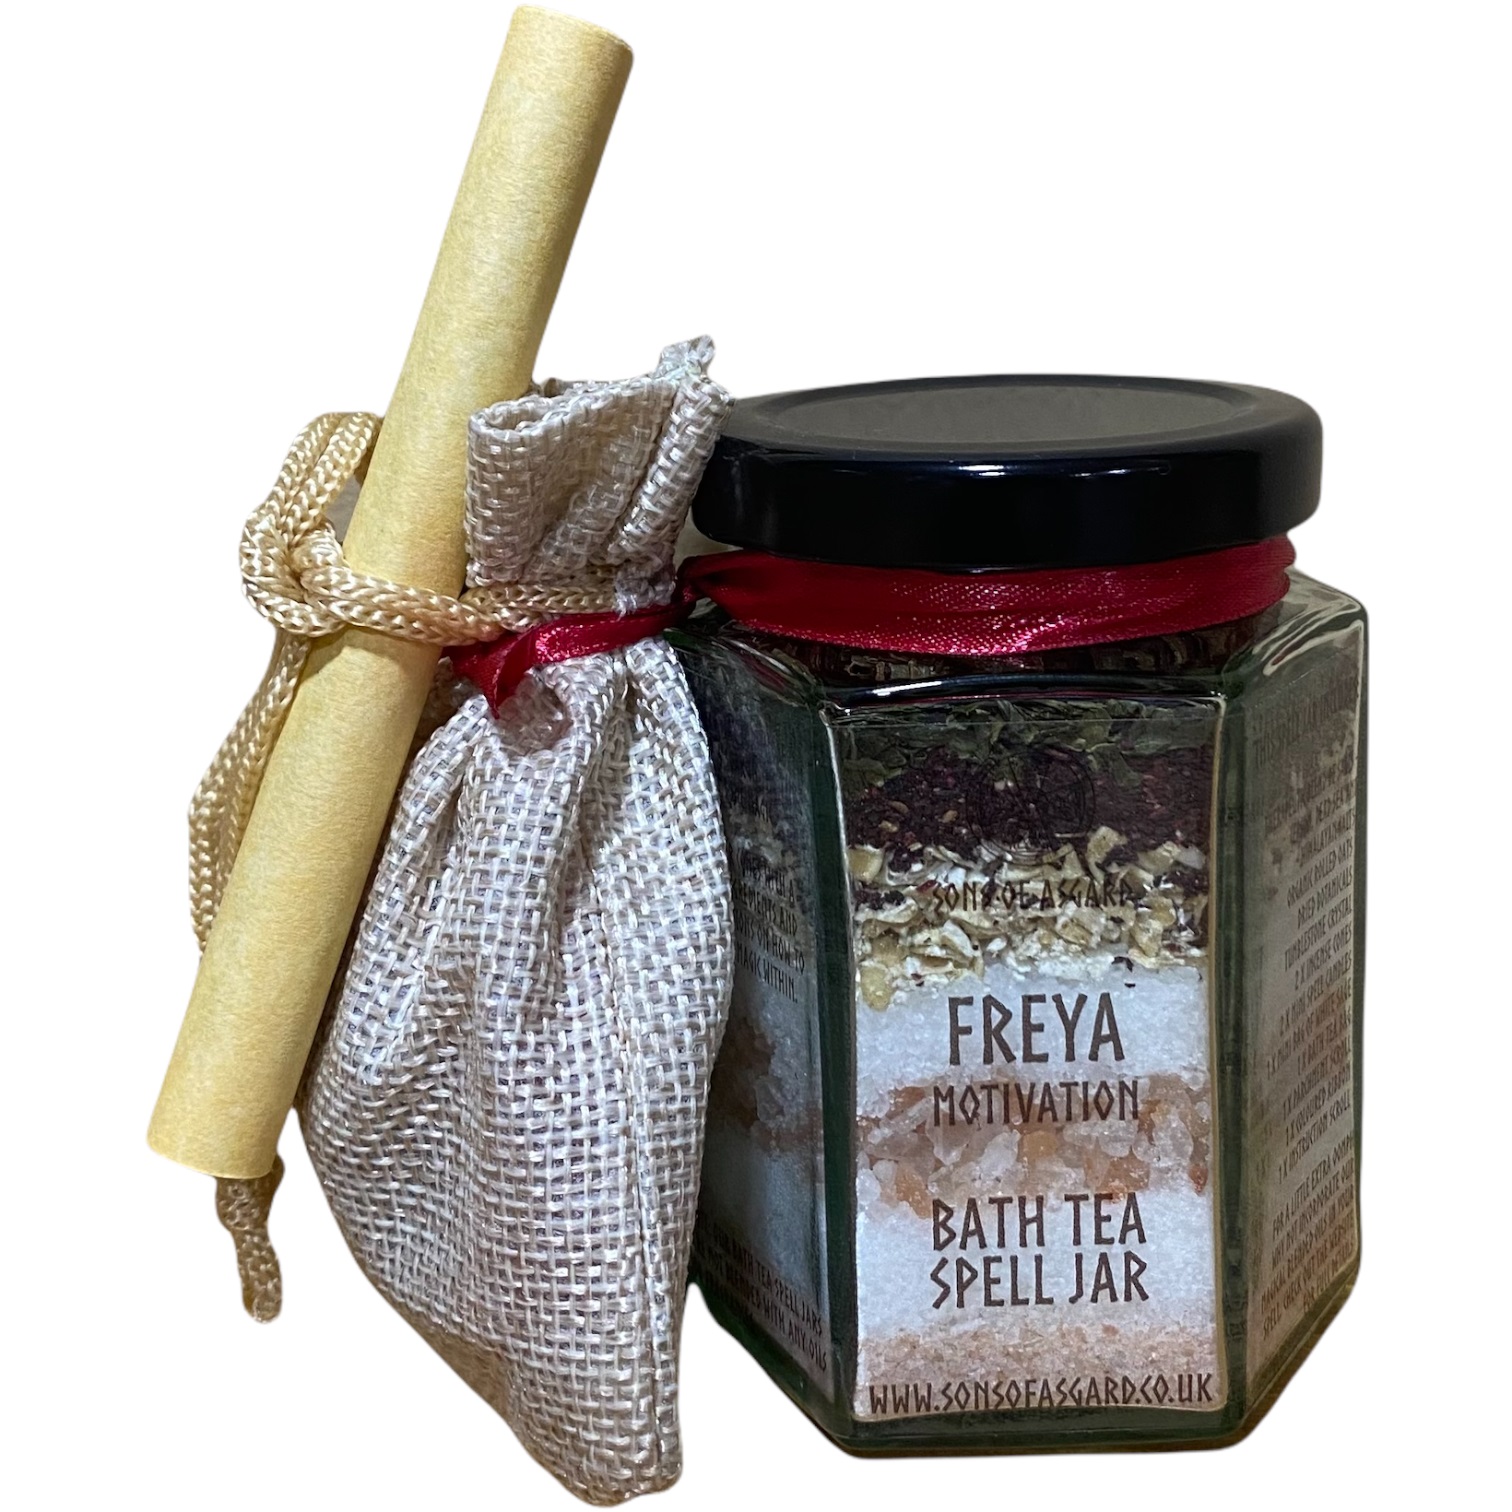 Freya (Motivation) - Bath Tea Spell Jar